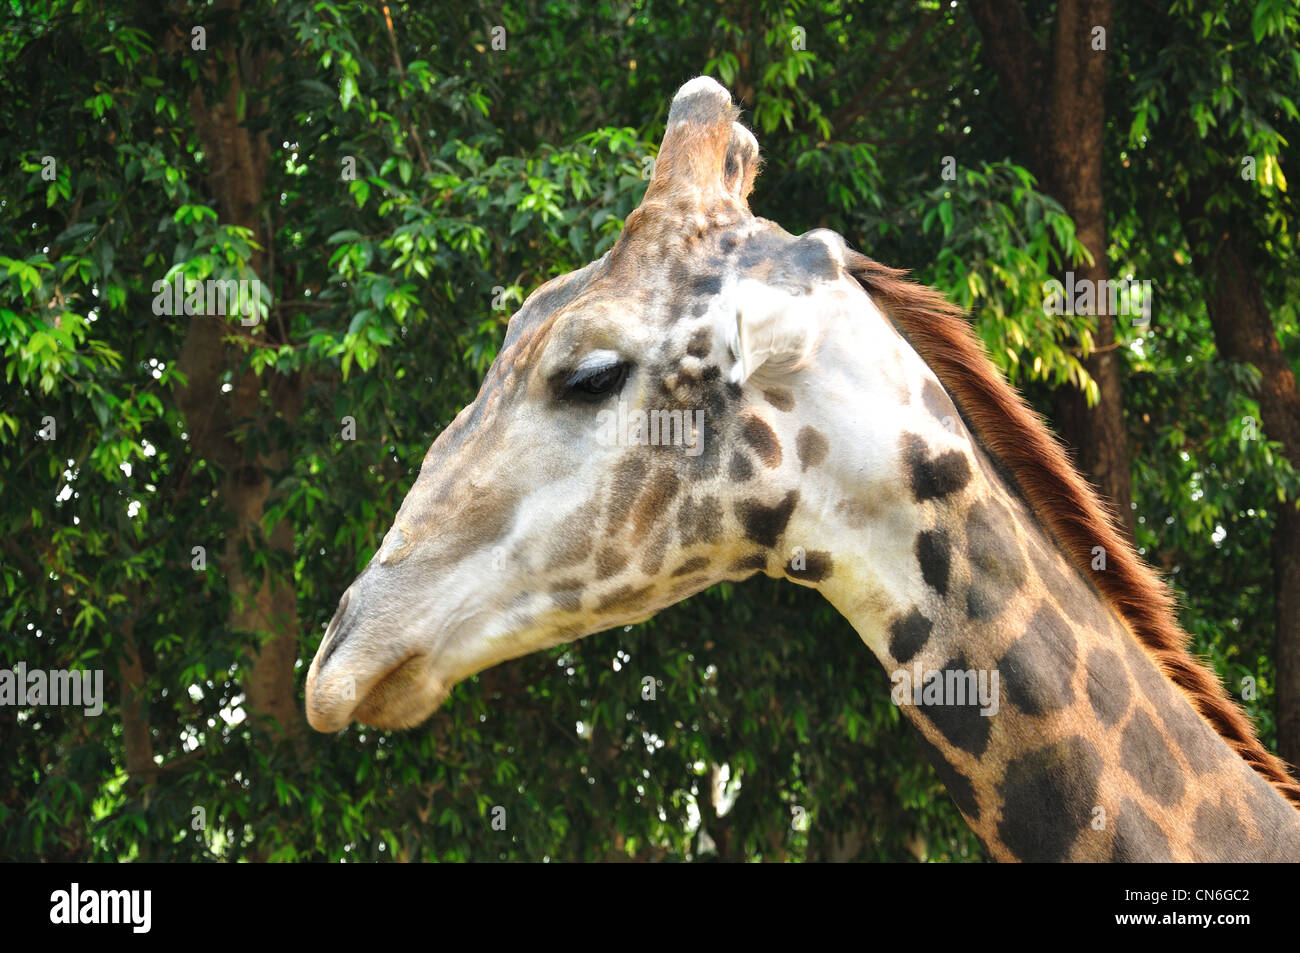 Girafe au zoo de Chiang Mai, Chiang Mai, la province de Chiang Mai, Thaïlande Banque D'Images